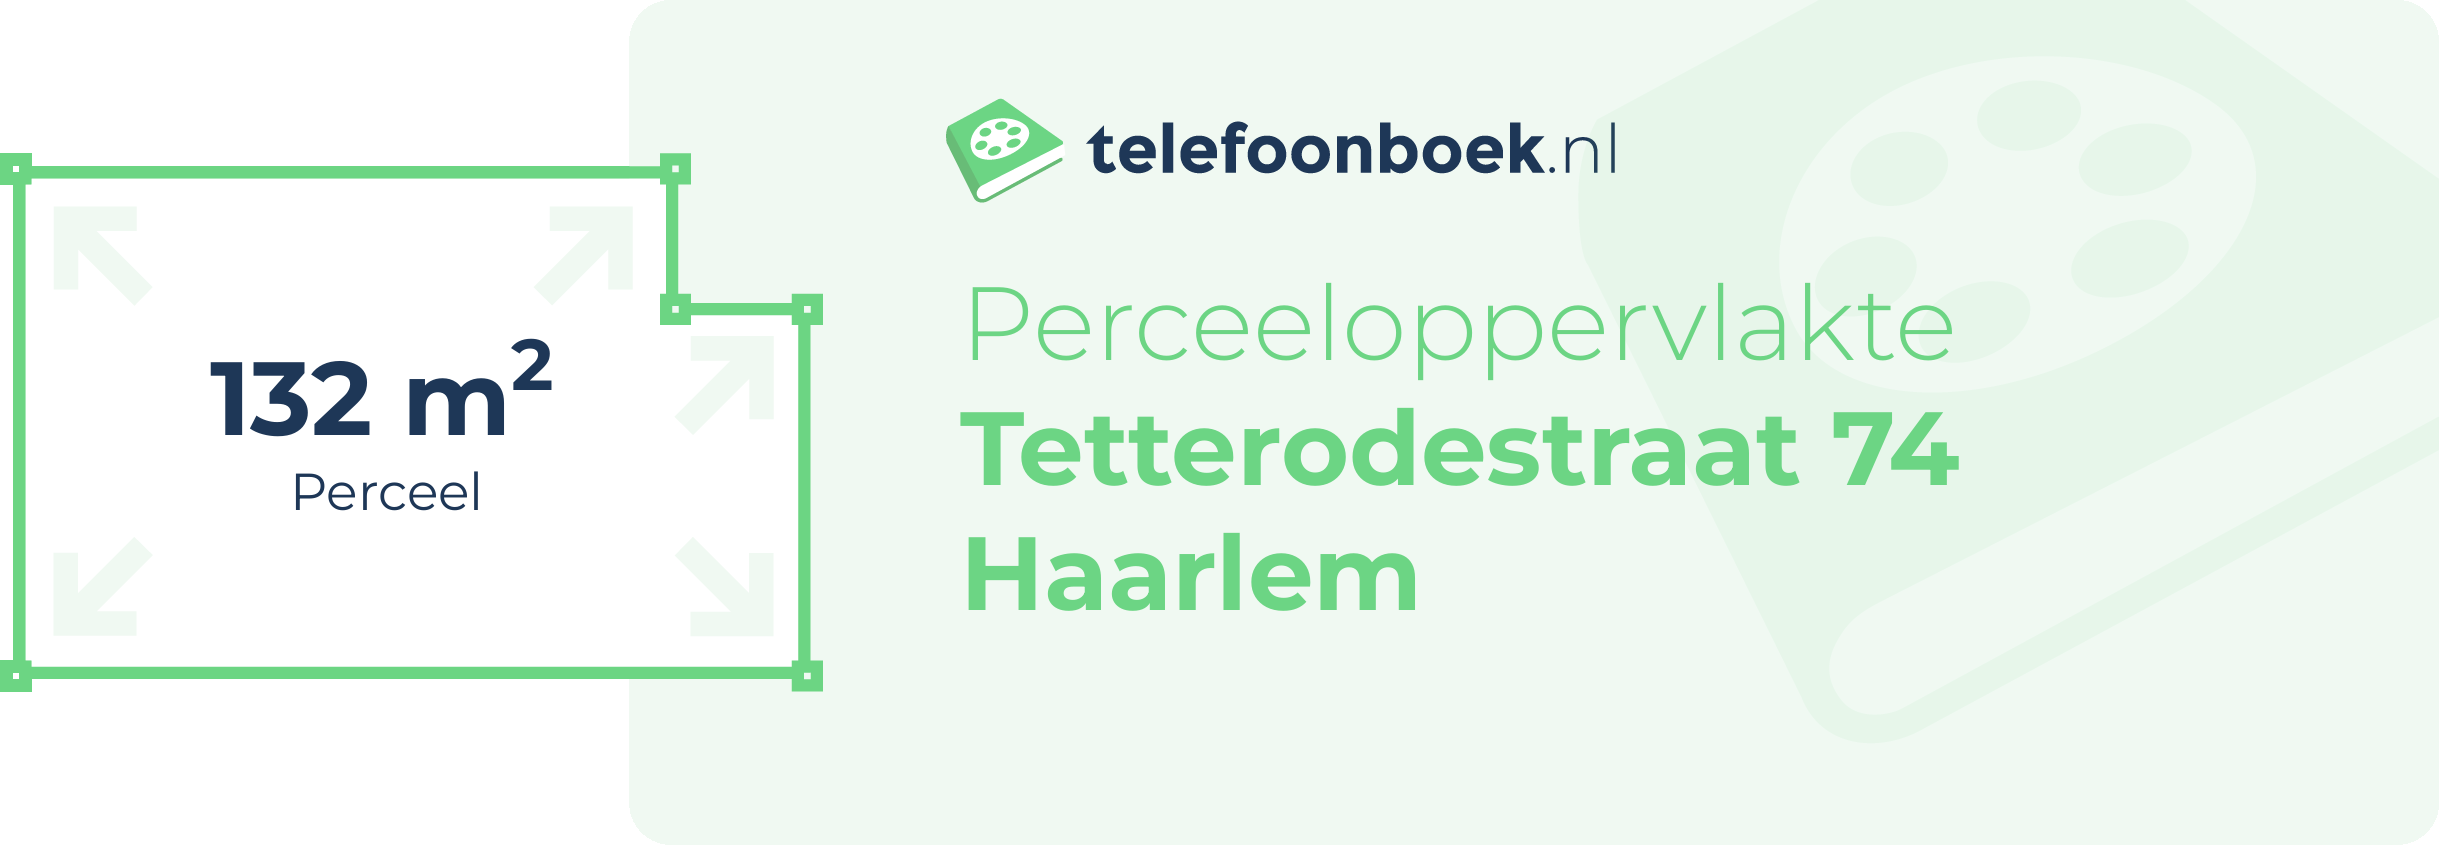 Perceeloppervlakte Tetterodestraat 74 Haarlem